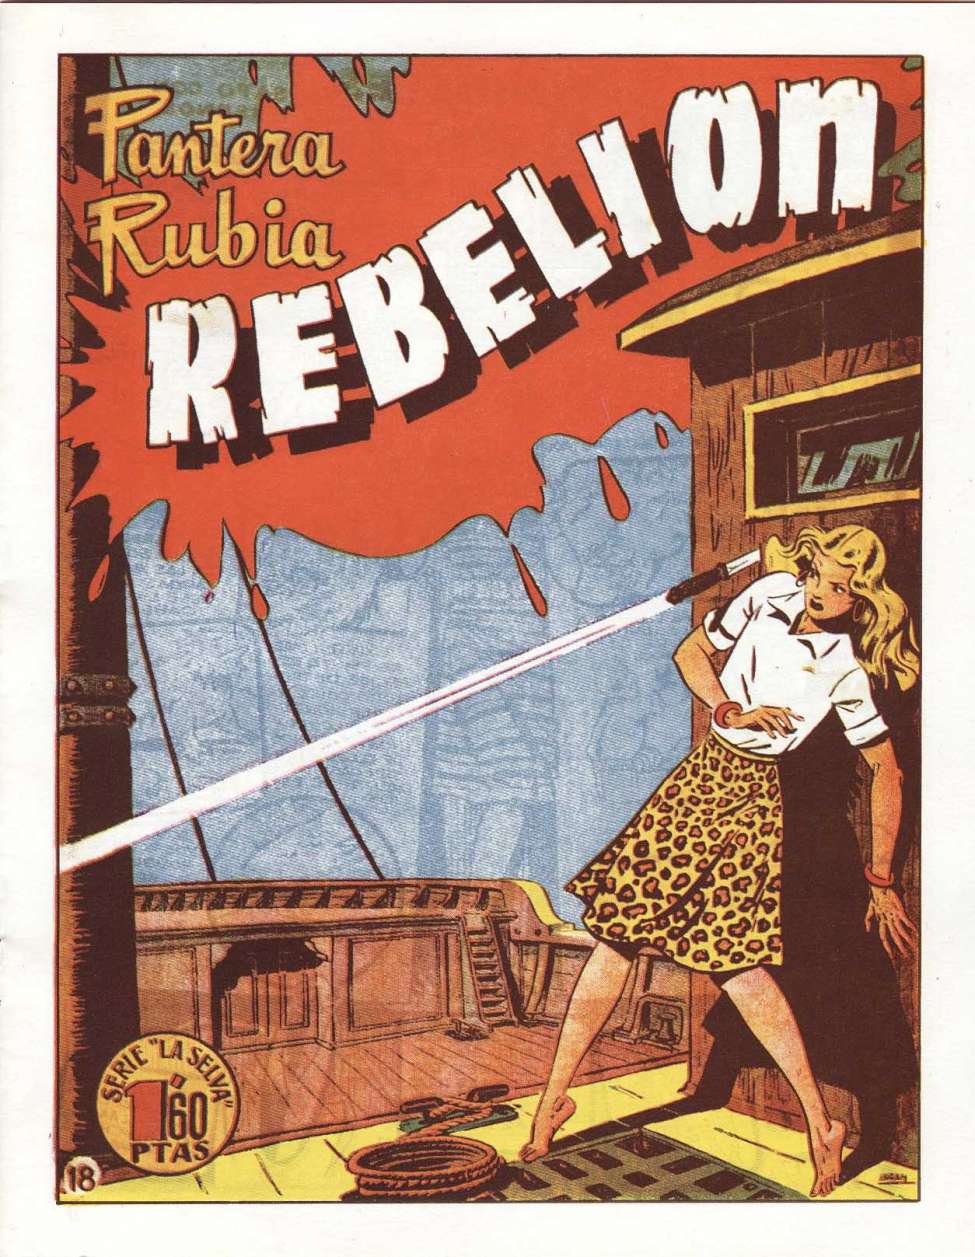 Book Cover For Pantera Rubia 13 - Rebelion